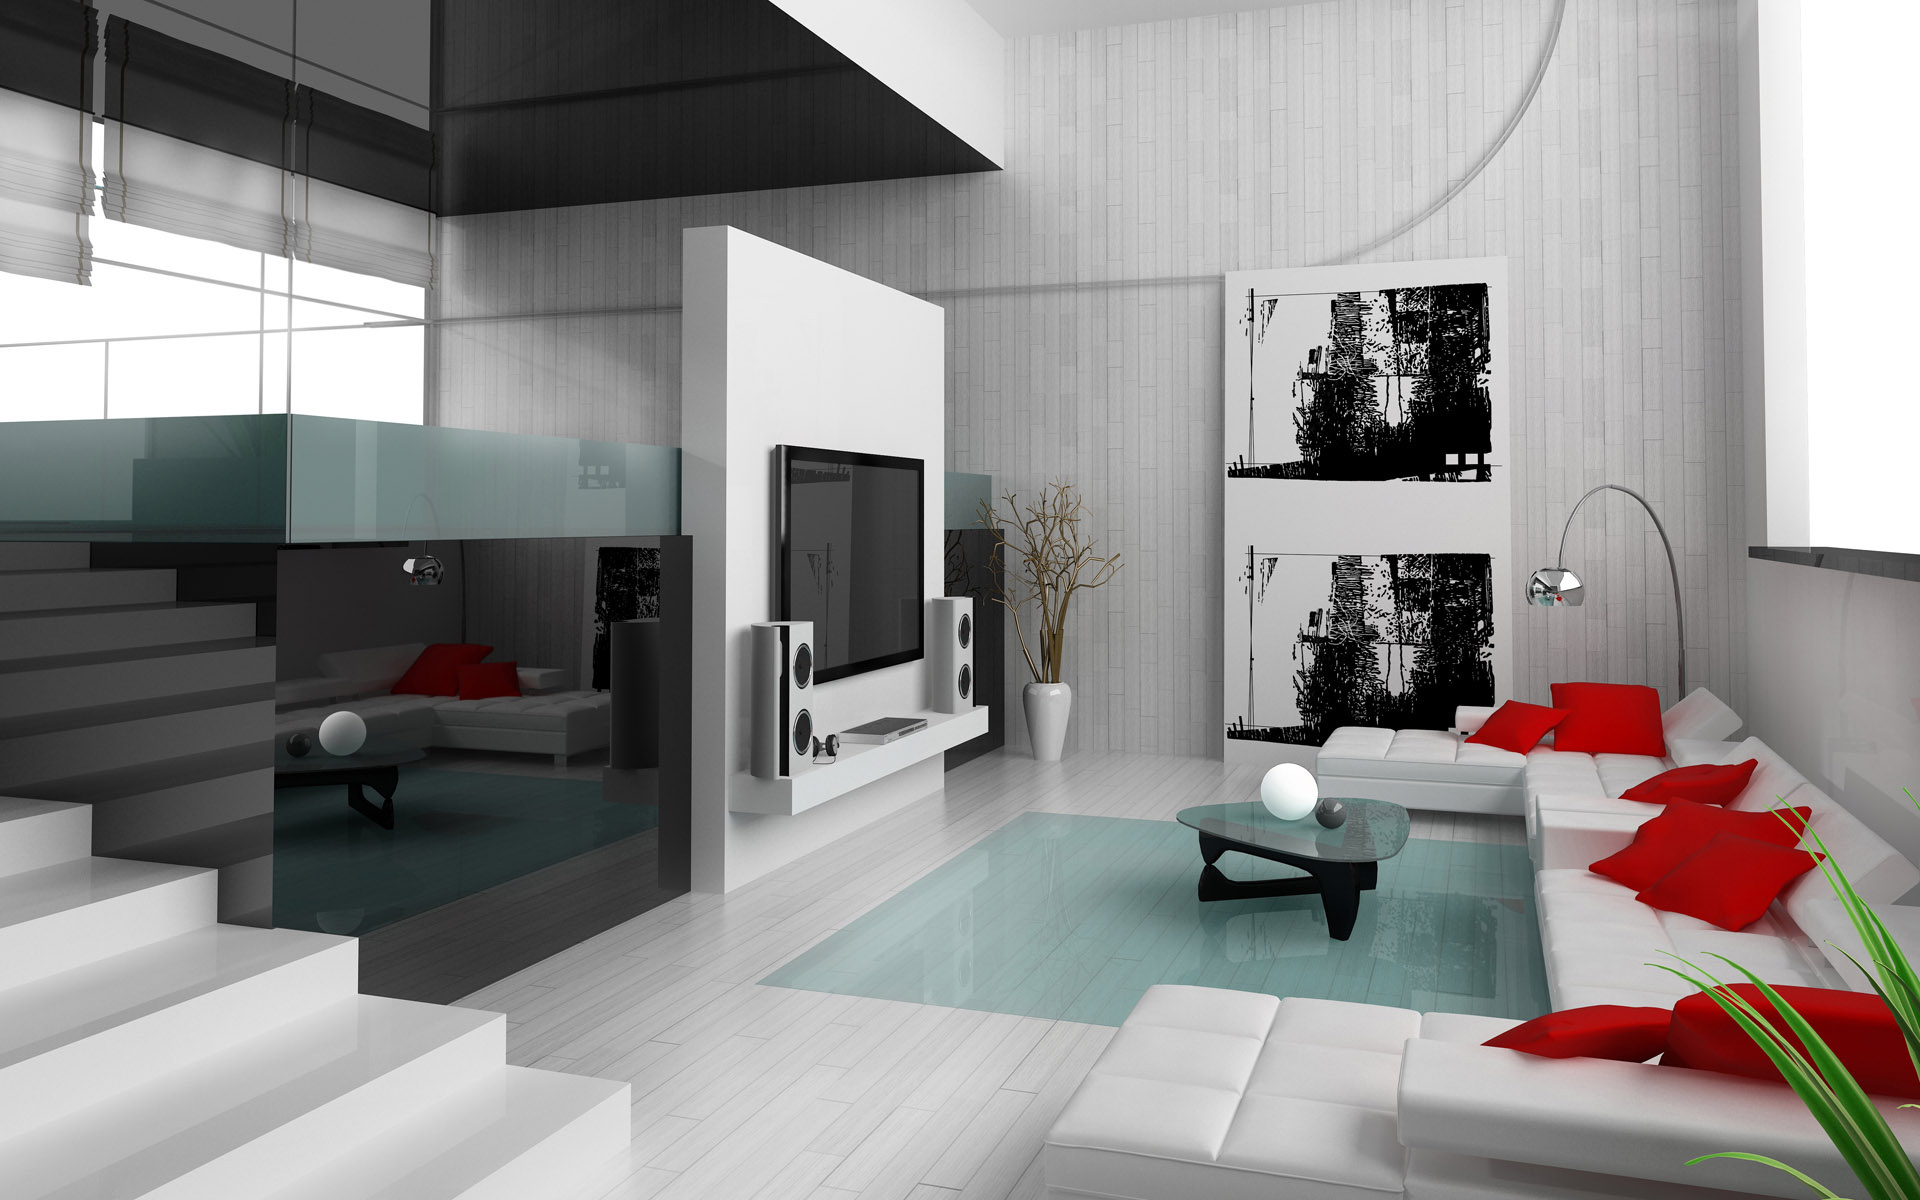 Minimalism 34 Great Living Room Designs Decoholic